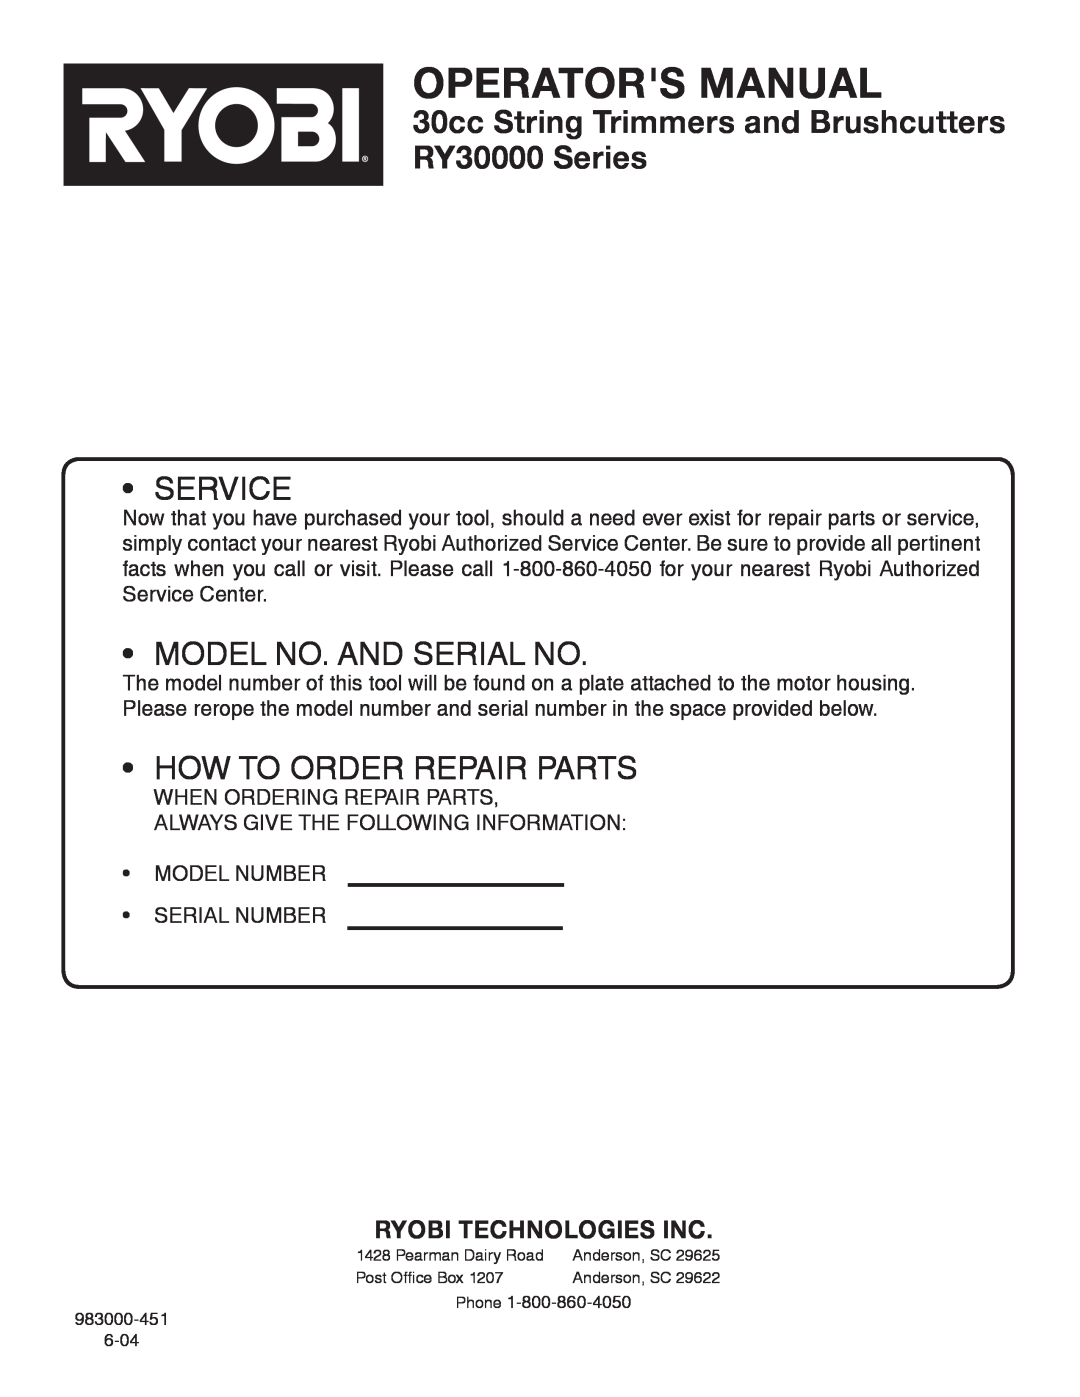 Ryobi Outdoor CS30, SS30, BC30 manual Ryobi Technologies Inc, Operators Manual, Service, Model No. And Serial No 